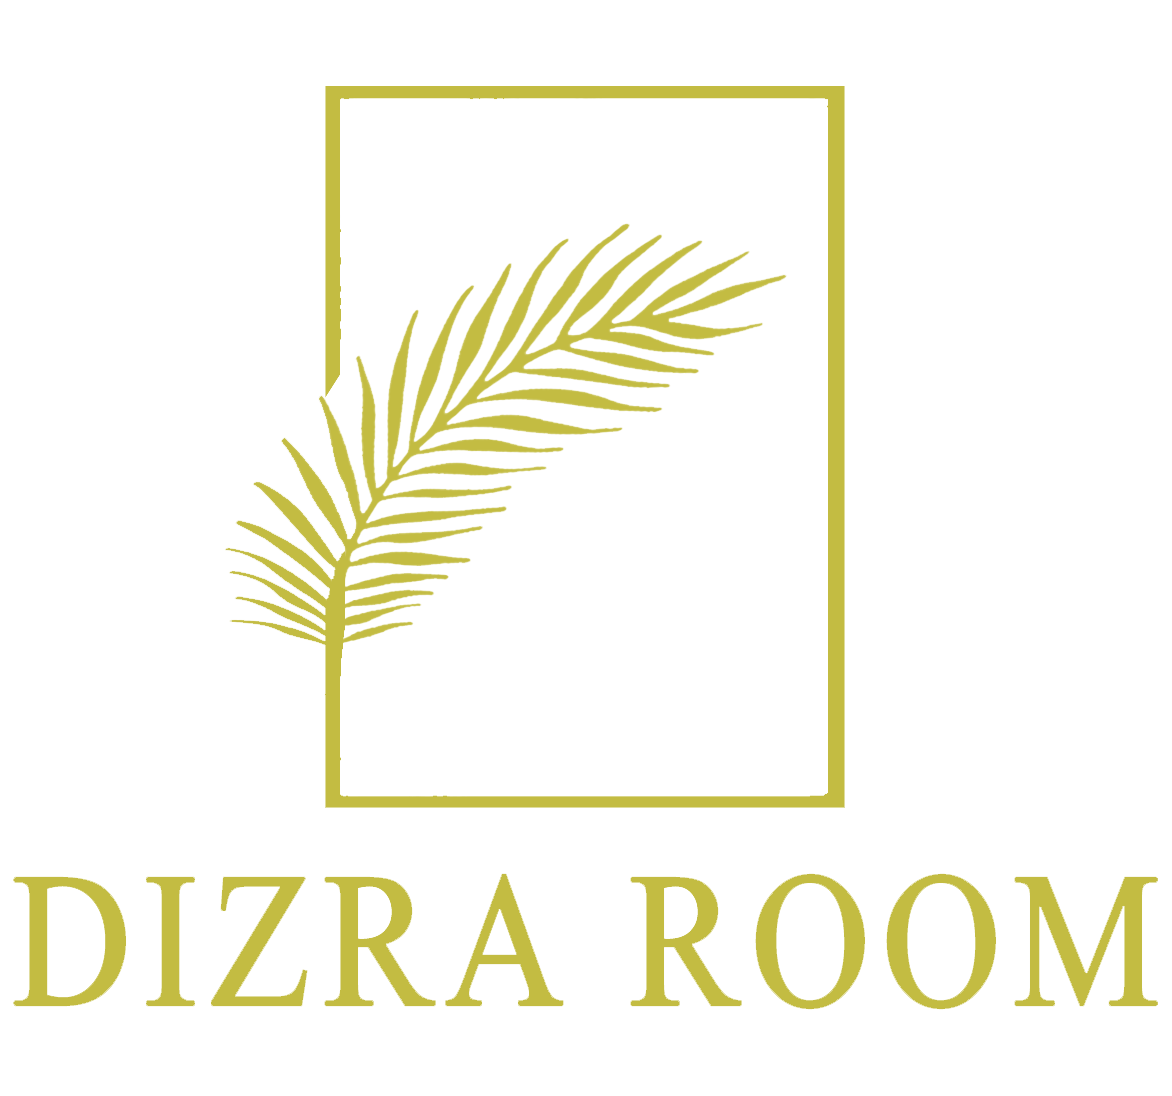  DIZRA ROOM 